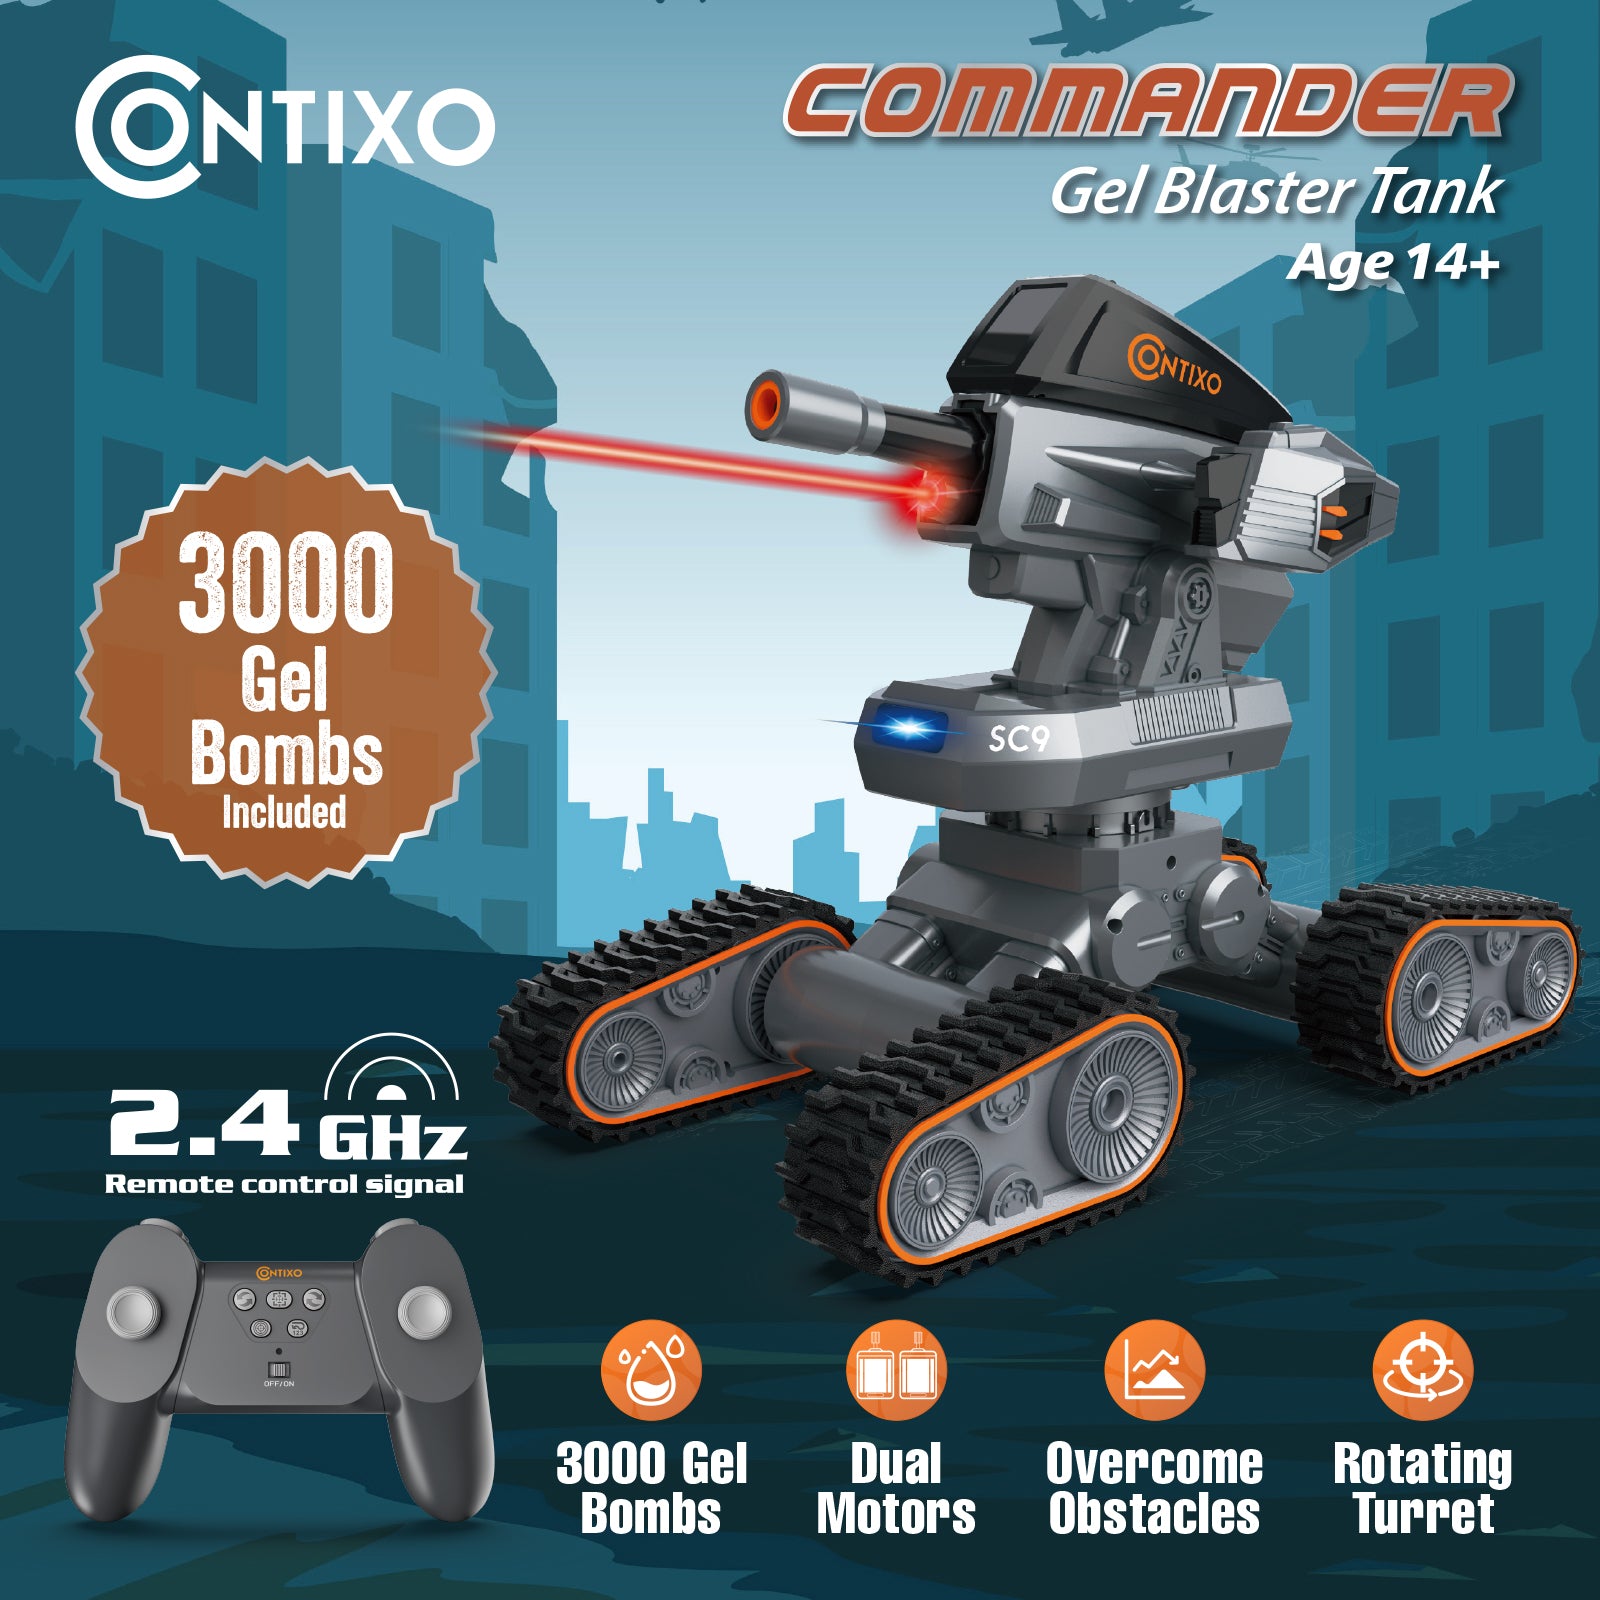 Contixo SC9 Remote Control Commander Gel Blaster Tank